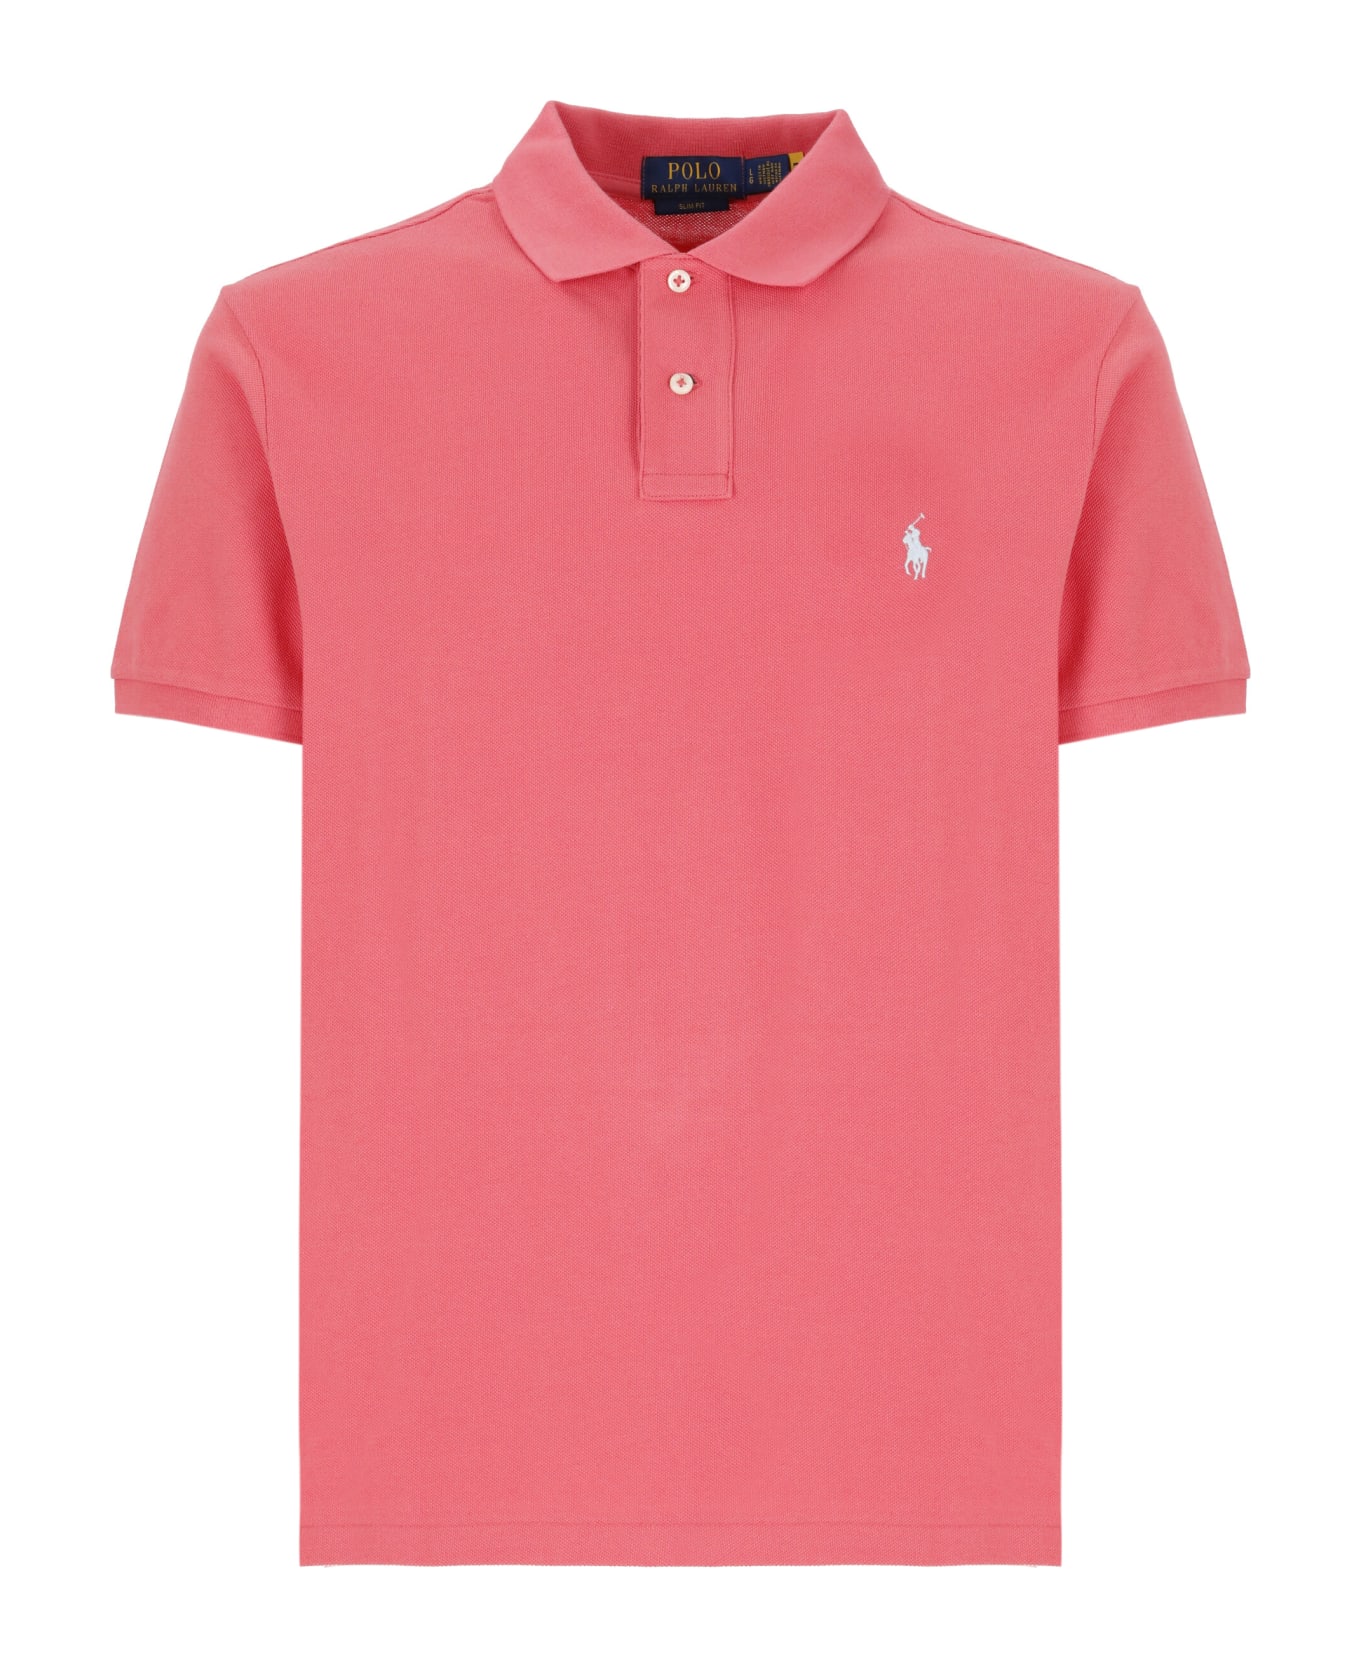 Polo Ralph Lauren Pony Shirt - Red